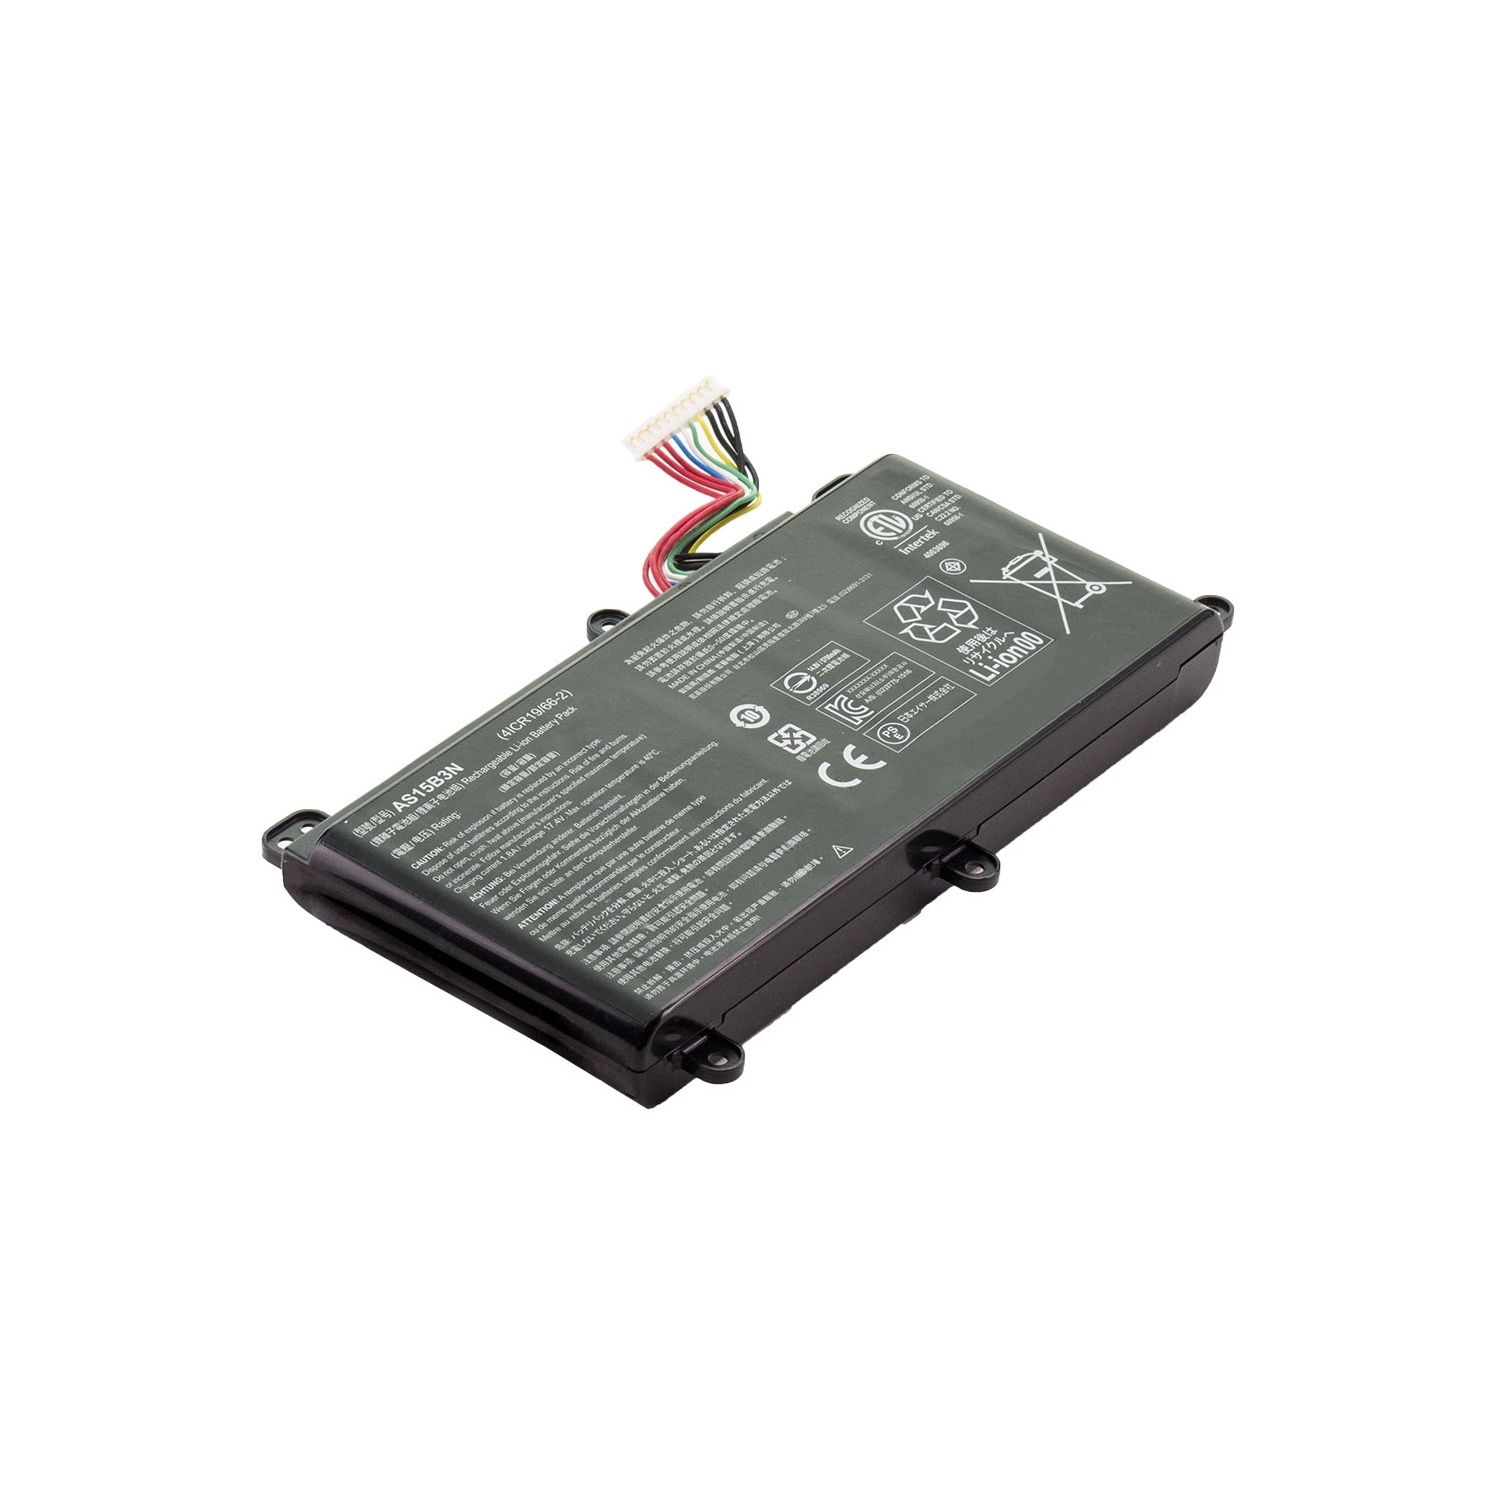 BATTDEPOT NEW Laptop Battery for Acer Predator 15 G9-592-7253 AS15B3N KT.00803.004 KT.00803.005